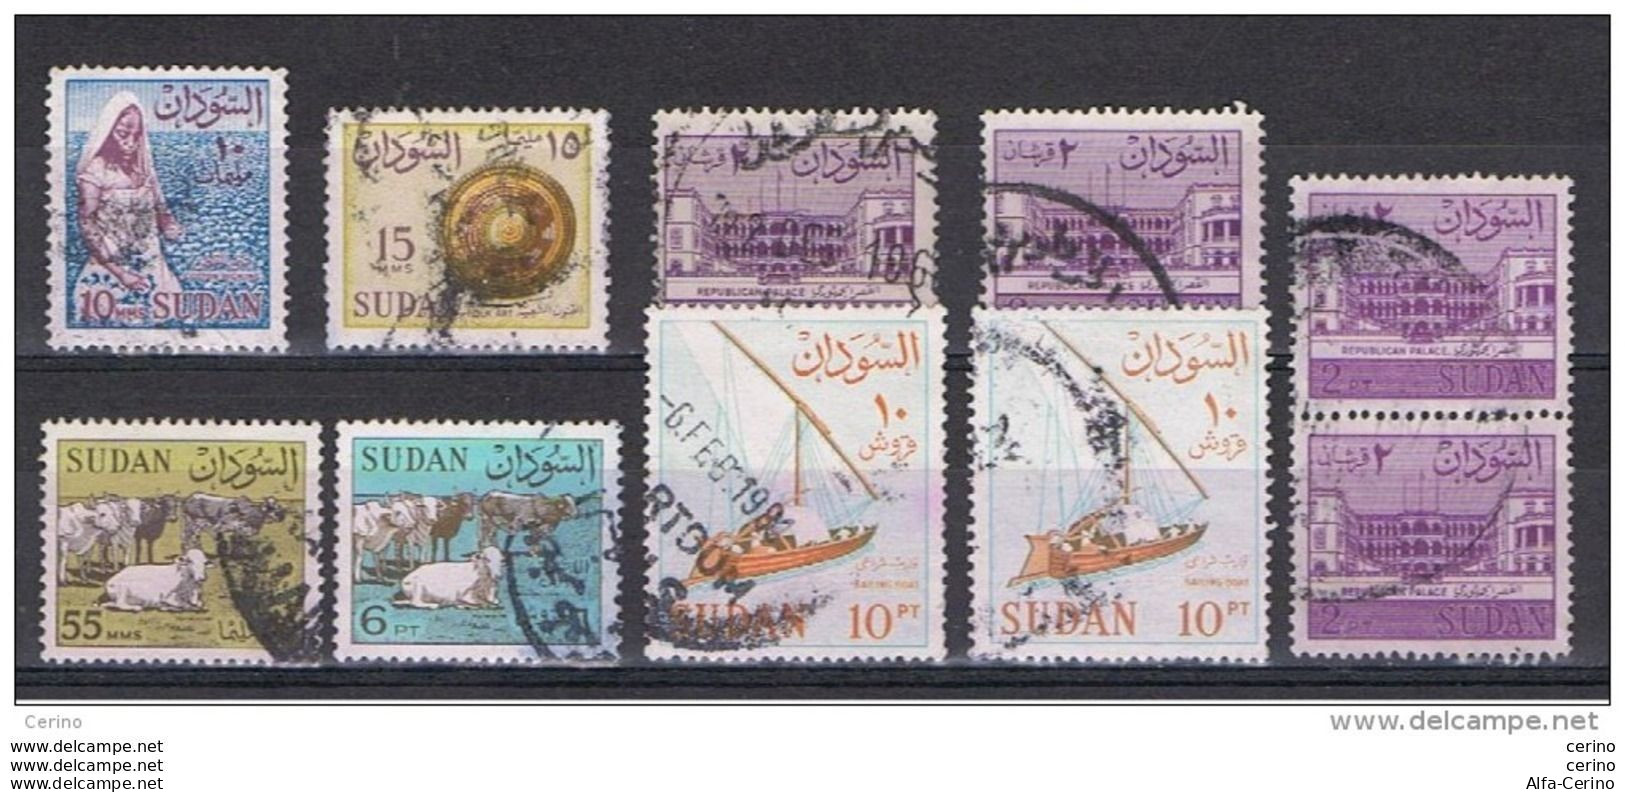 SUDAN:  1962  DEFINITIVA  -  INSIEME  10  VALORI  US. -  YV/TELL. 145//154 - Sudan (1954-...)